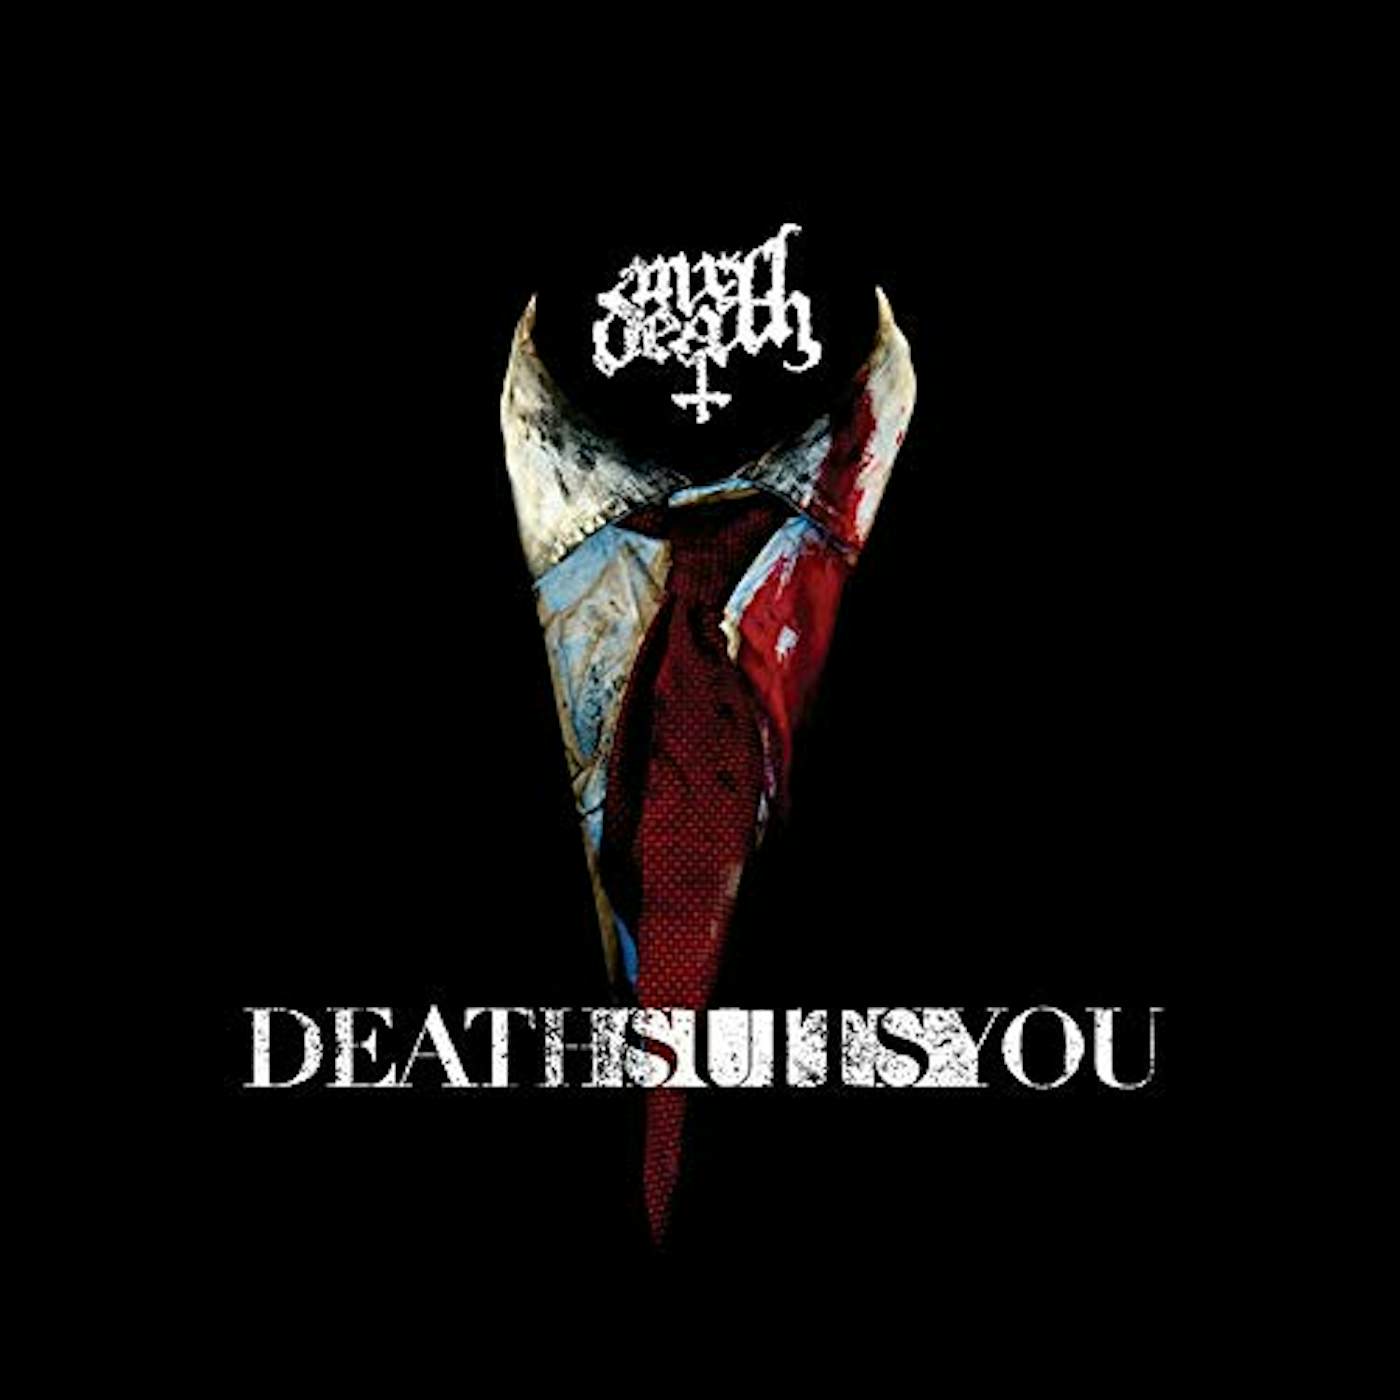 Mr. Death Death Suits You Vinyl Record